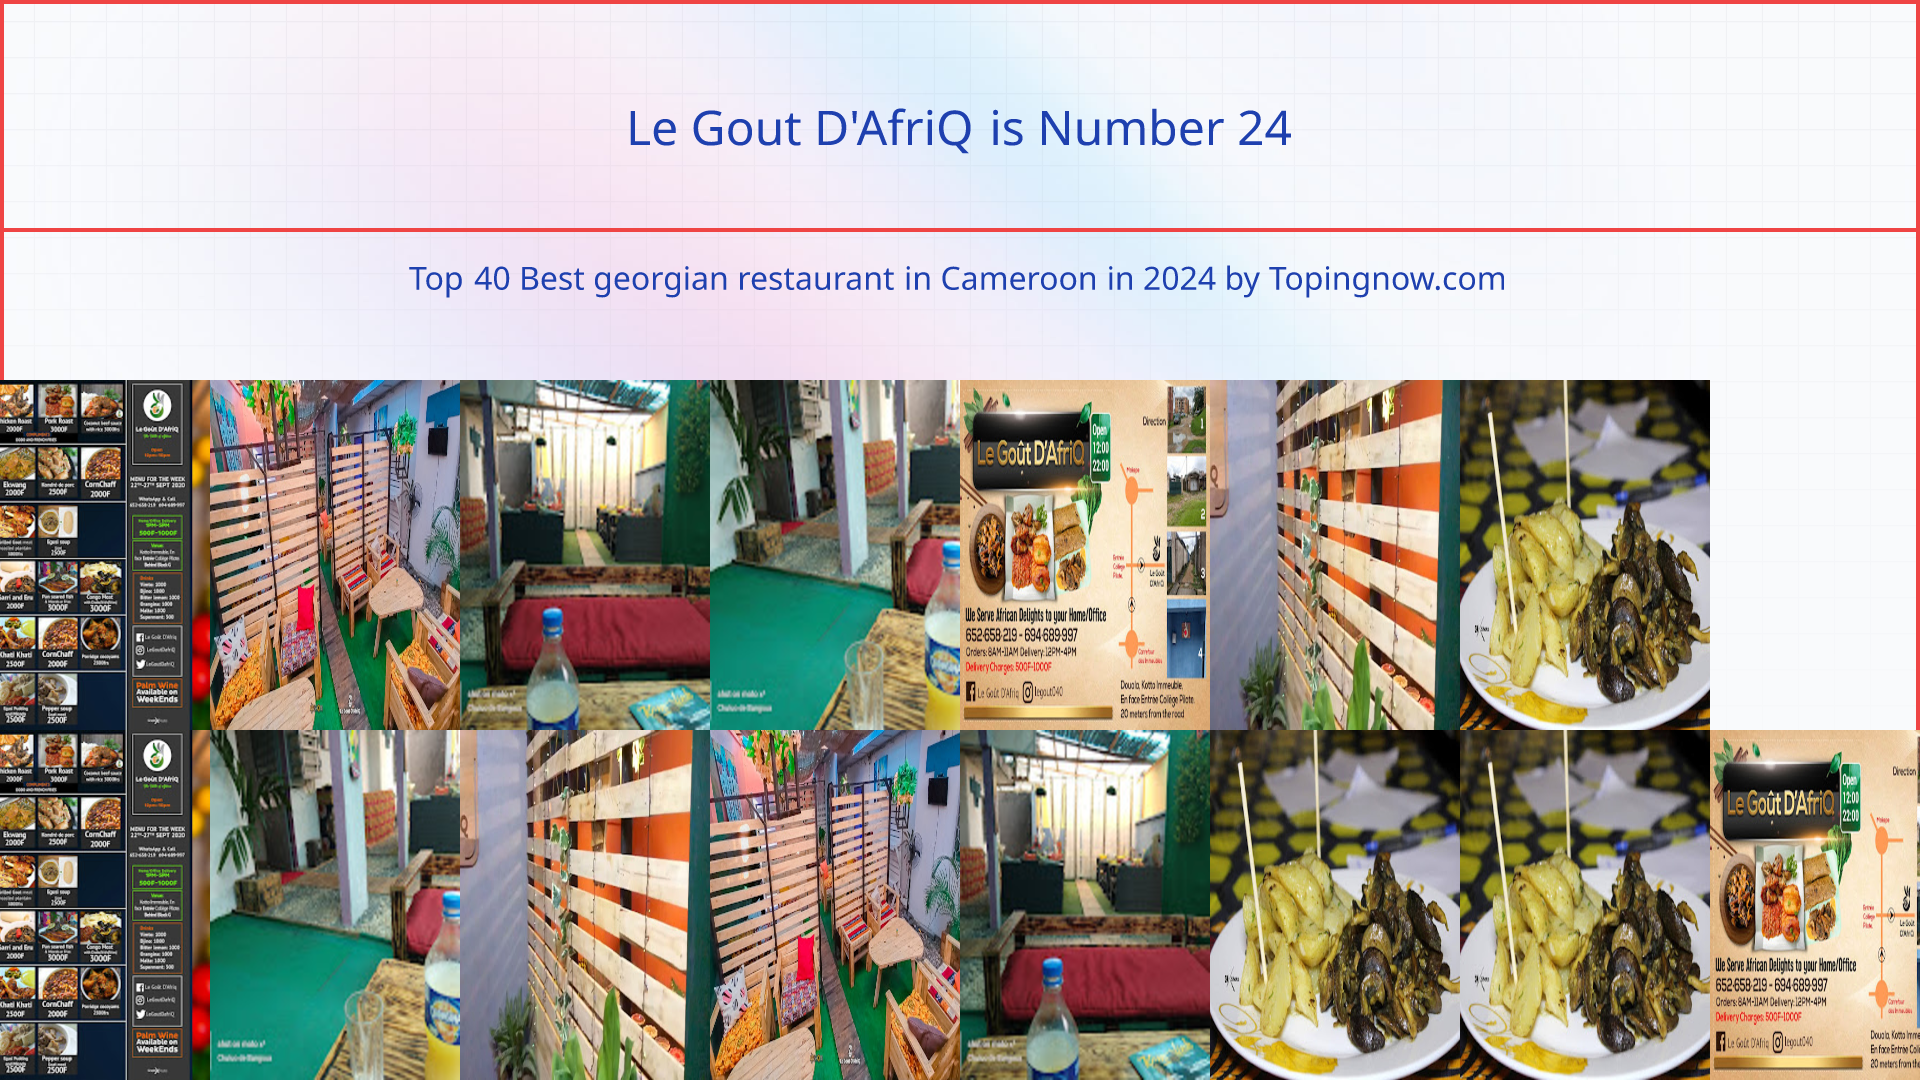 Le Gout D'AfriQ: Top 40 Best georgian restaurant in Cameroon in 2024